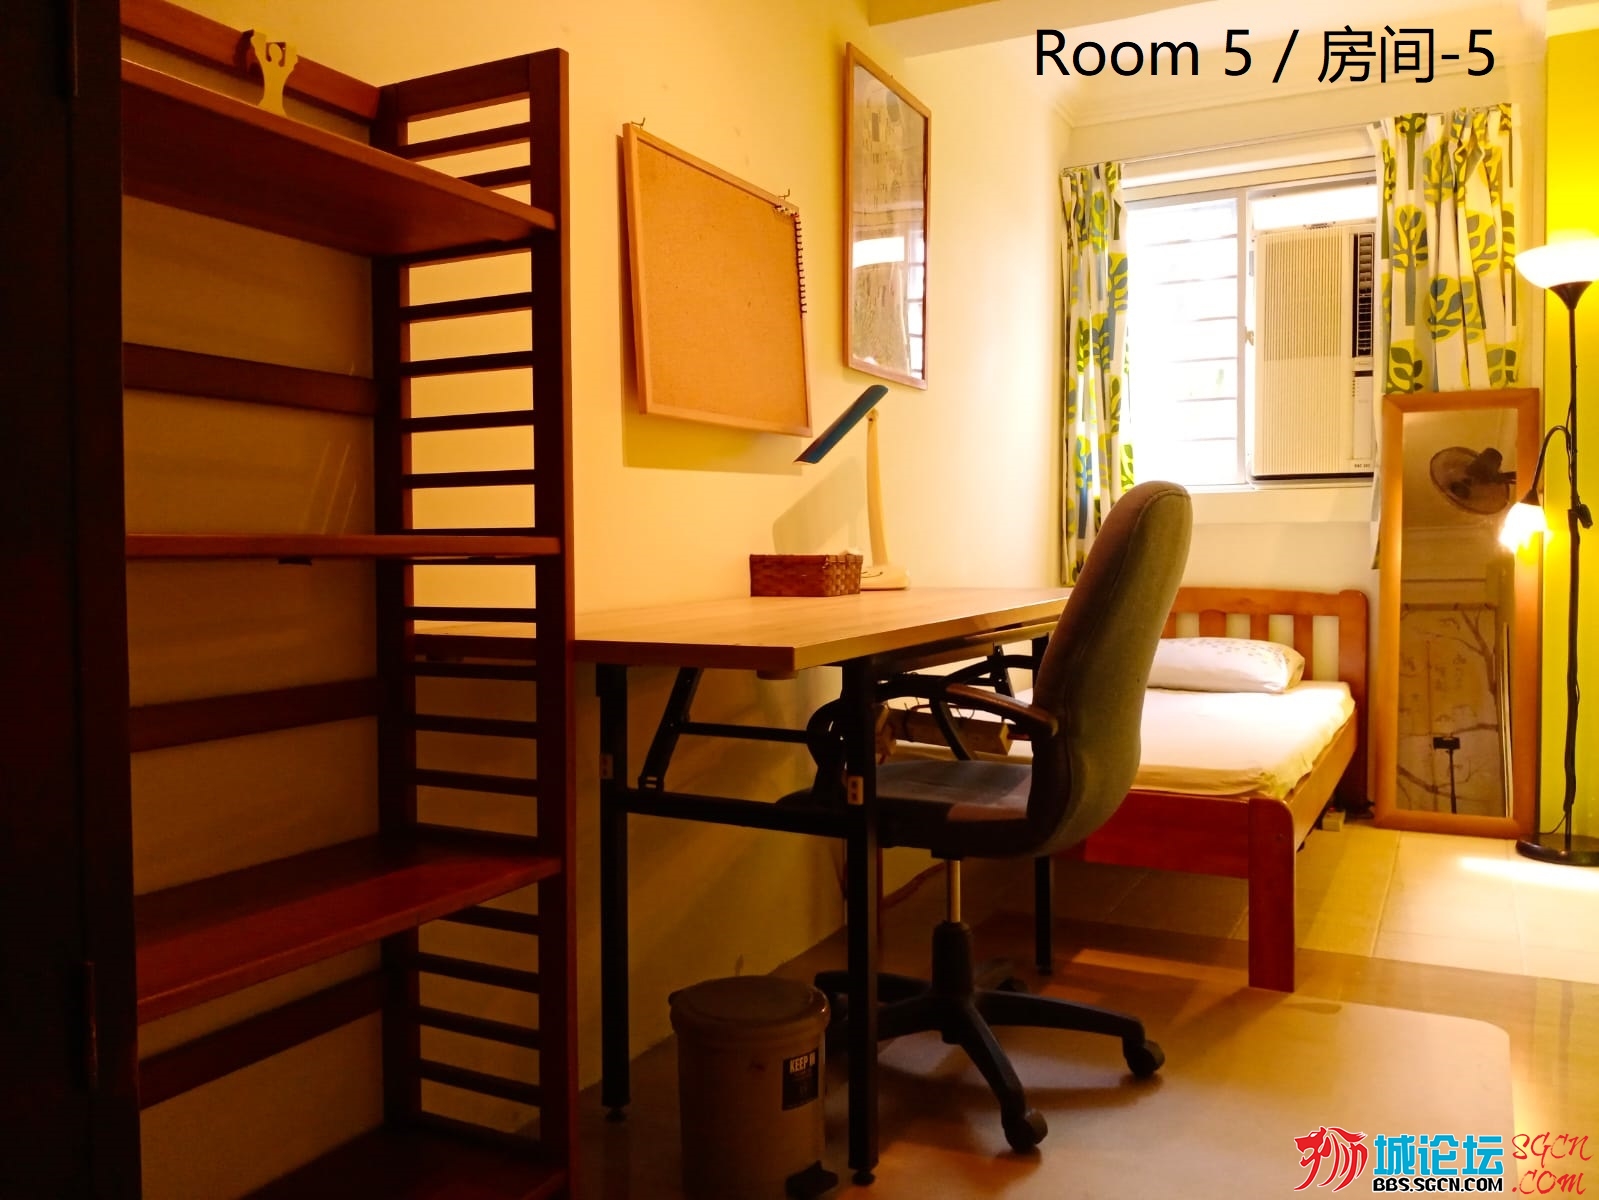 Room 5_6.jpg